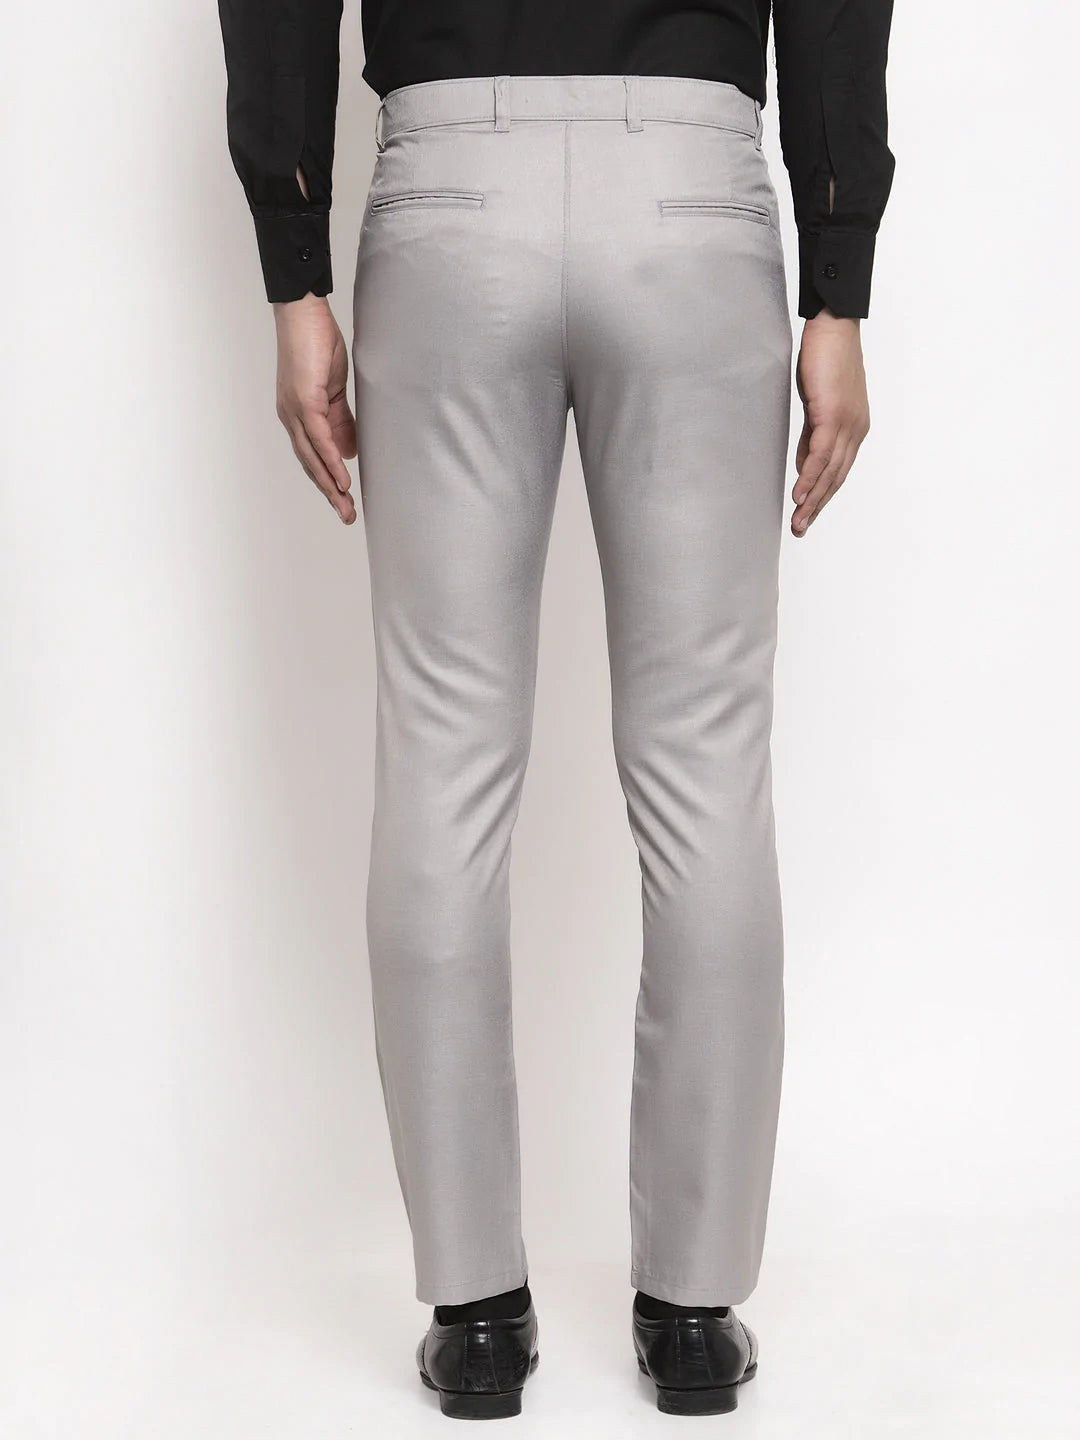 Jainish Men's Grey Cotton Solid Formal Trousers ( FGP 258Light-Grey )